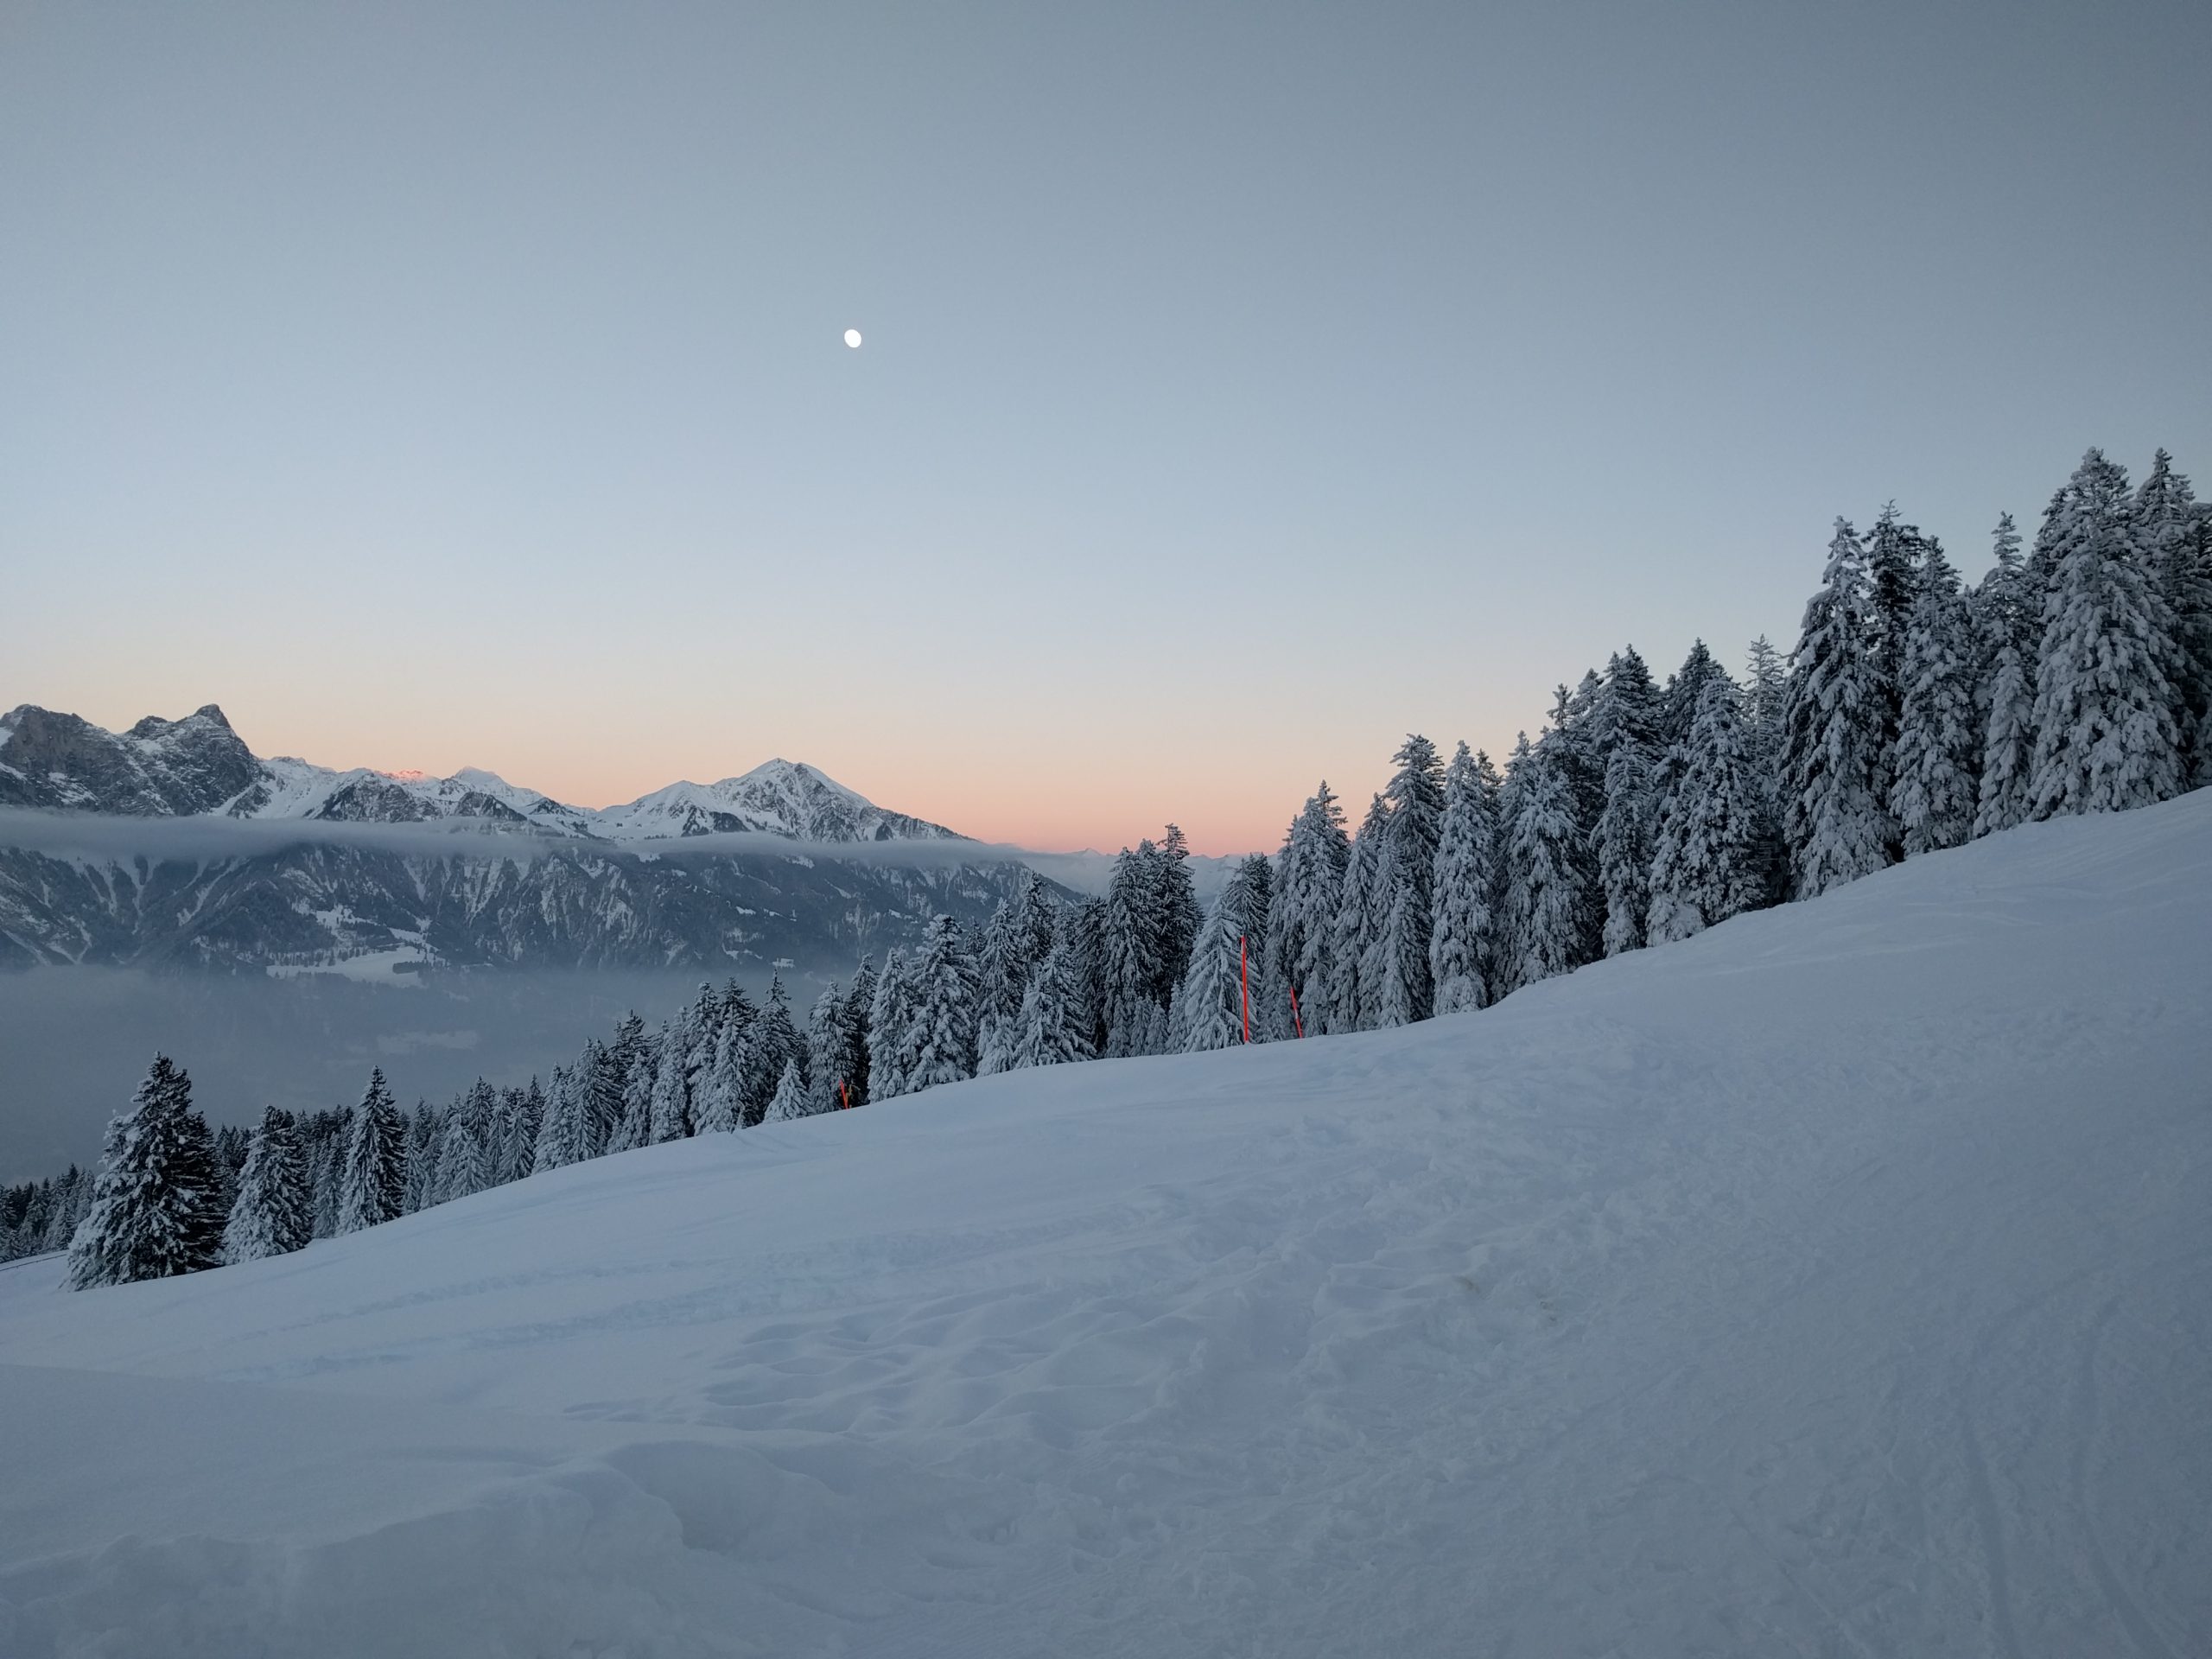 Sunset over empty ski slopes